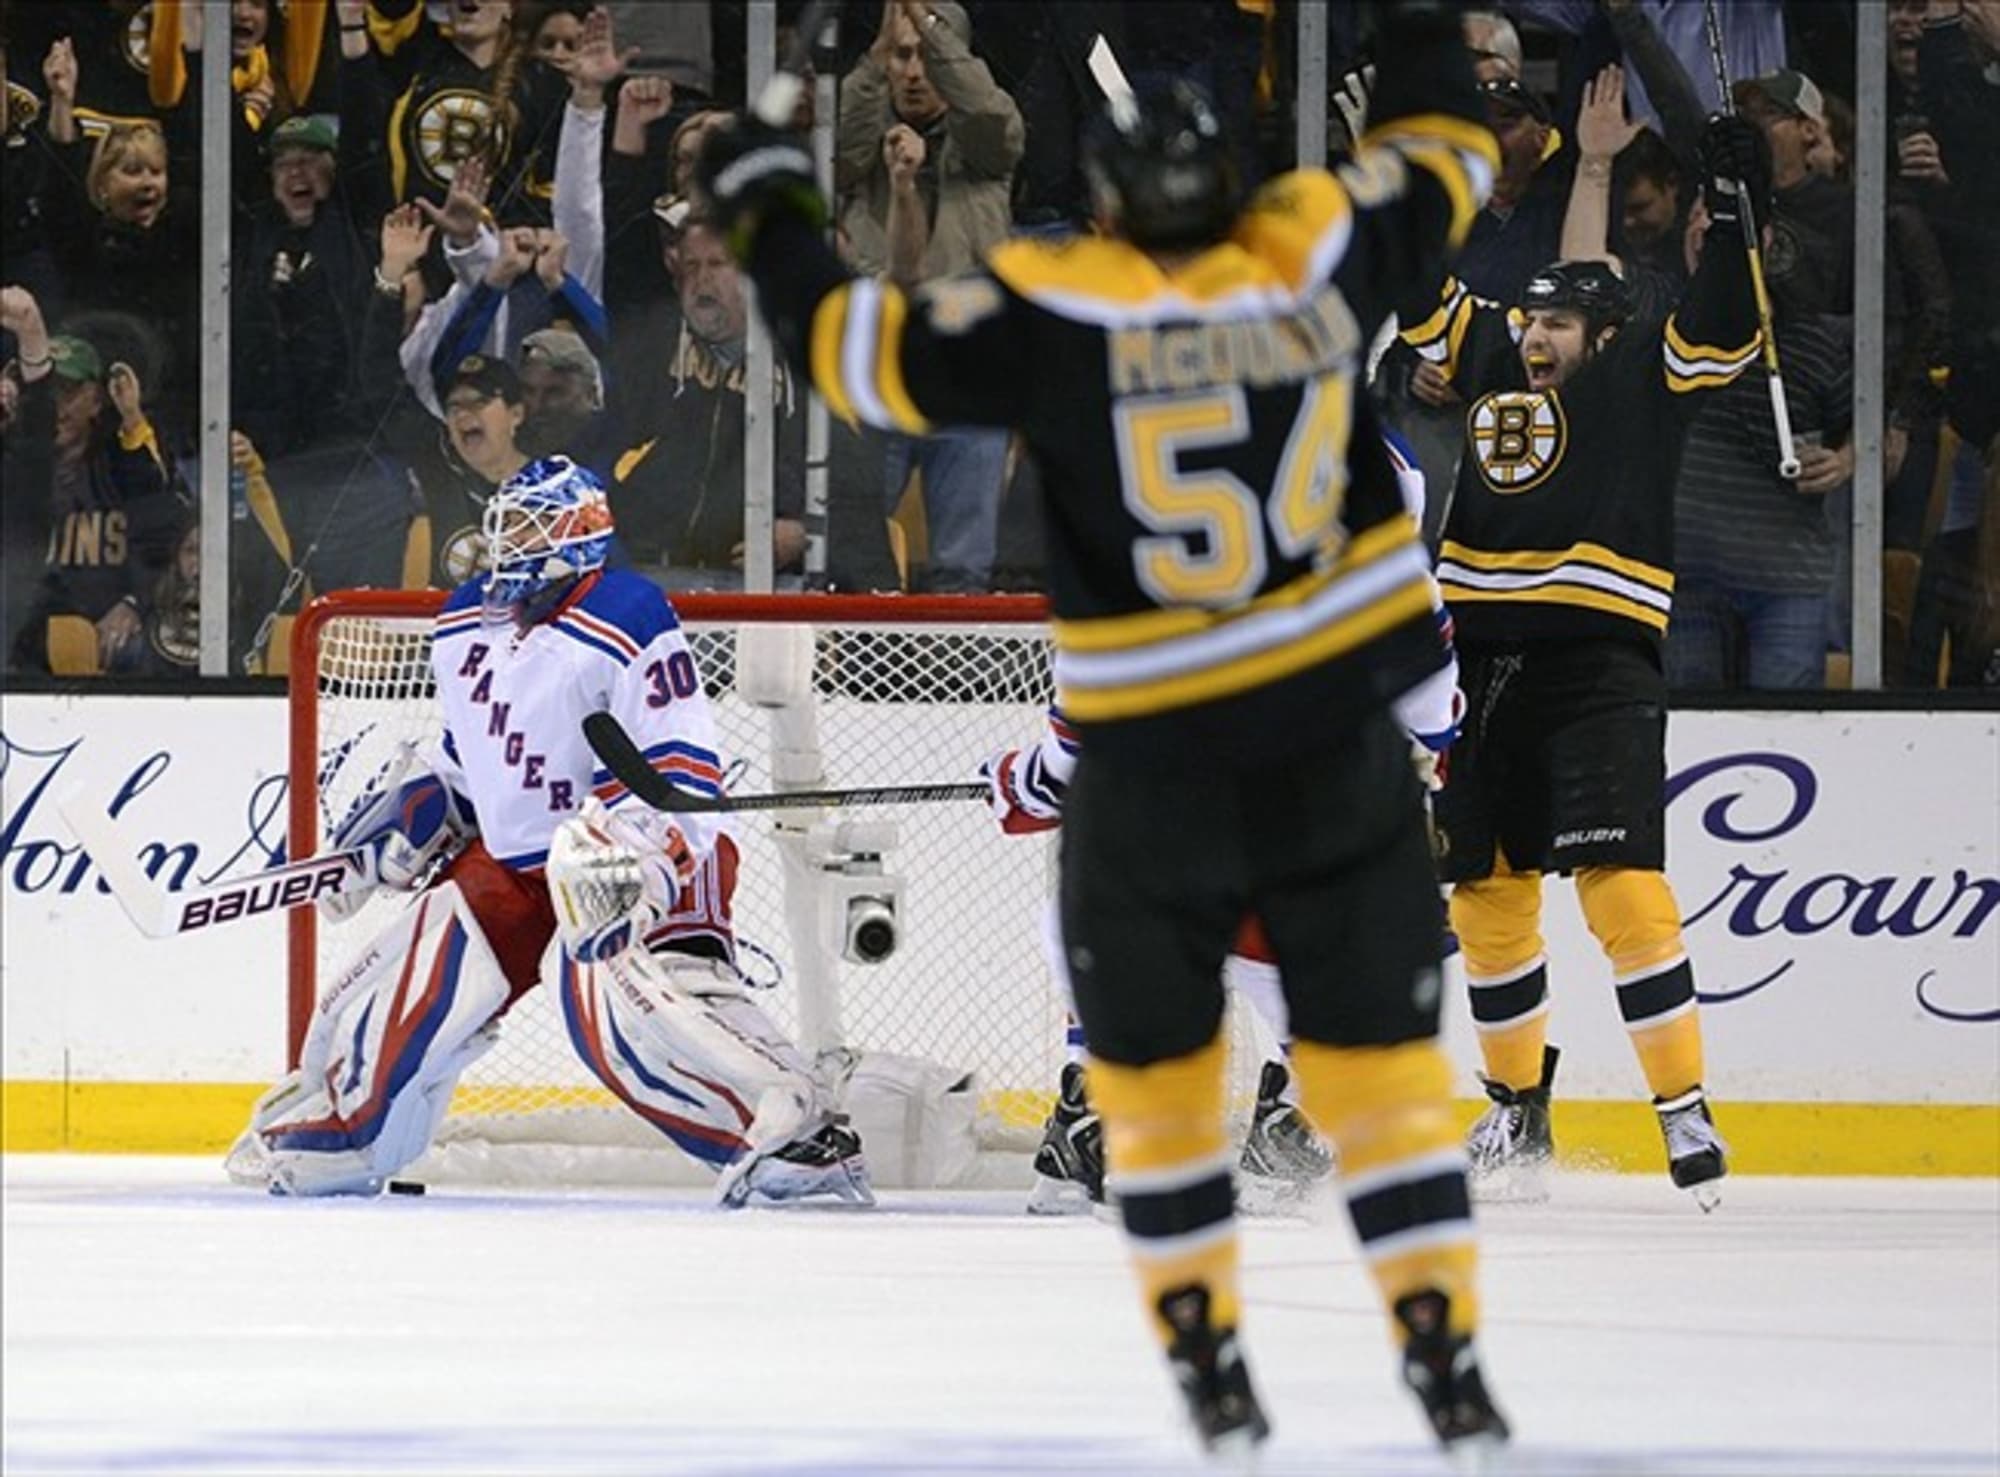 Rangers vs. Bruins Final Score Boston Dominates New York to Take 20